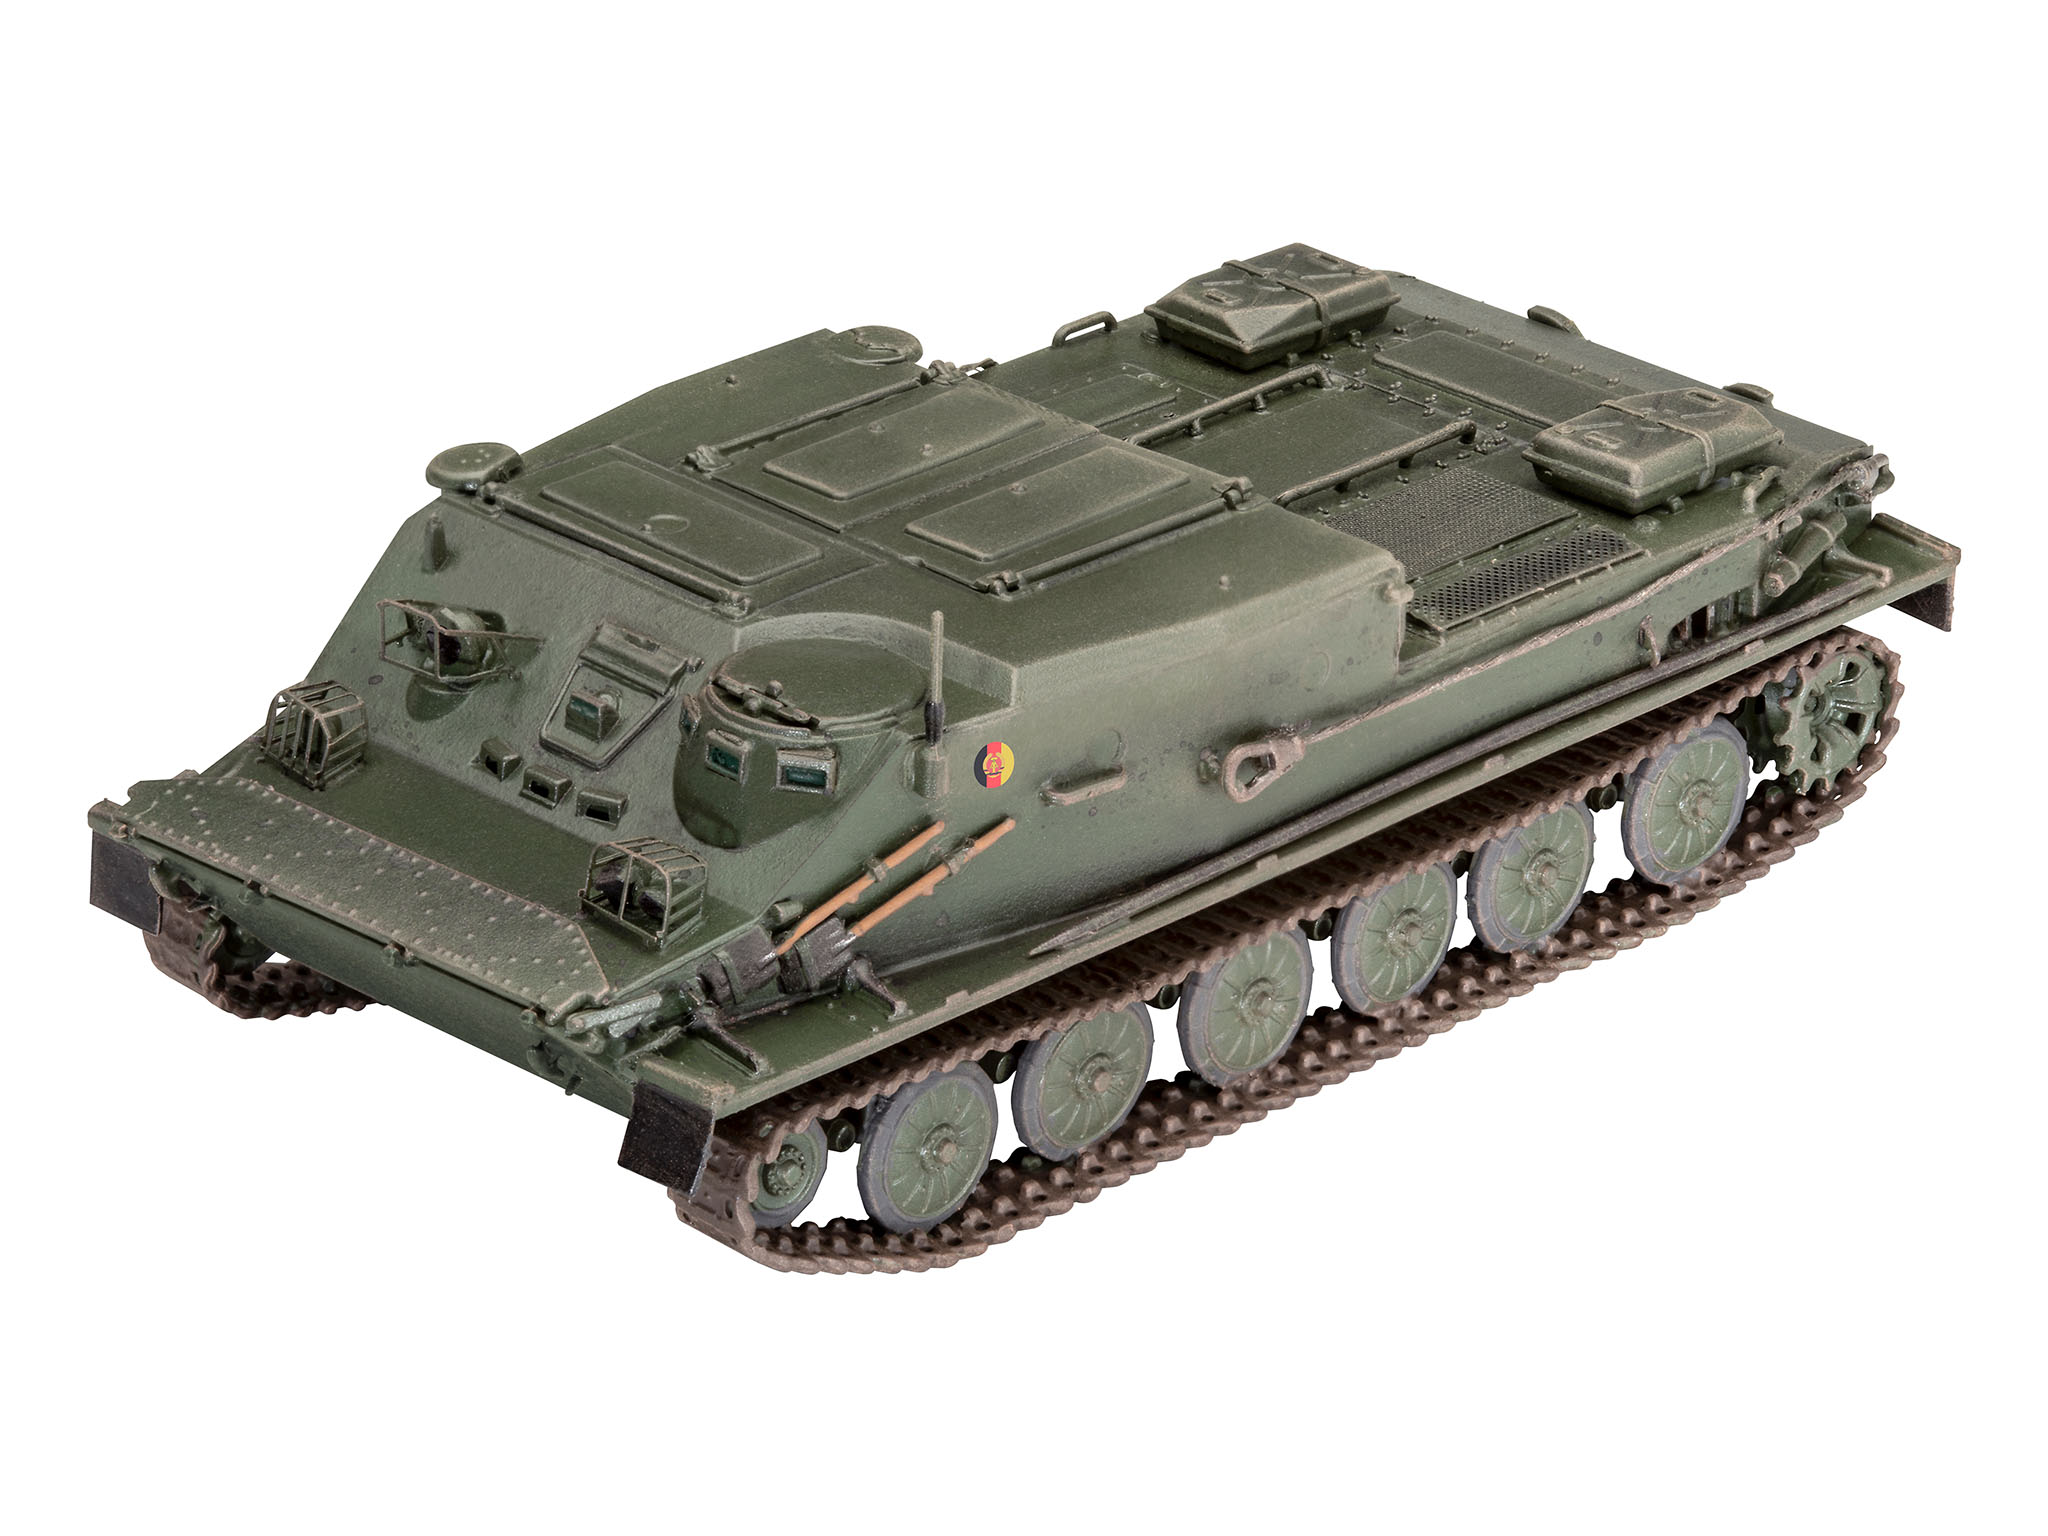 BTR-50PK - 03313